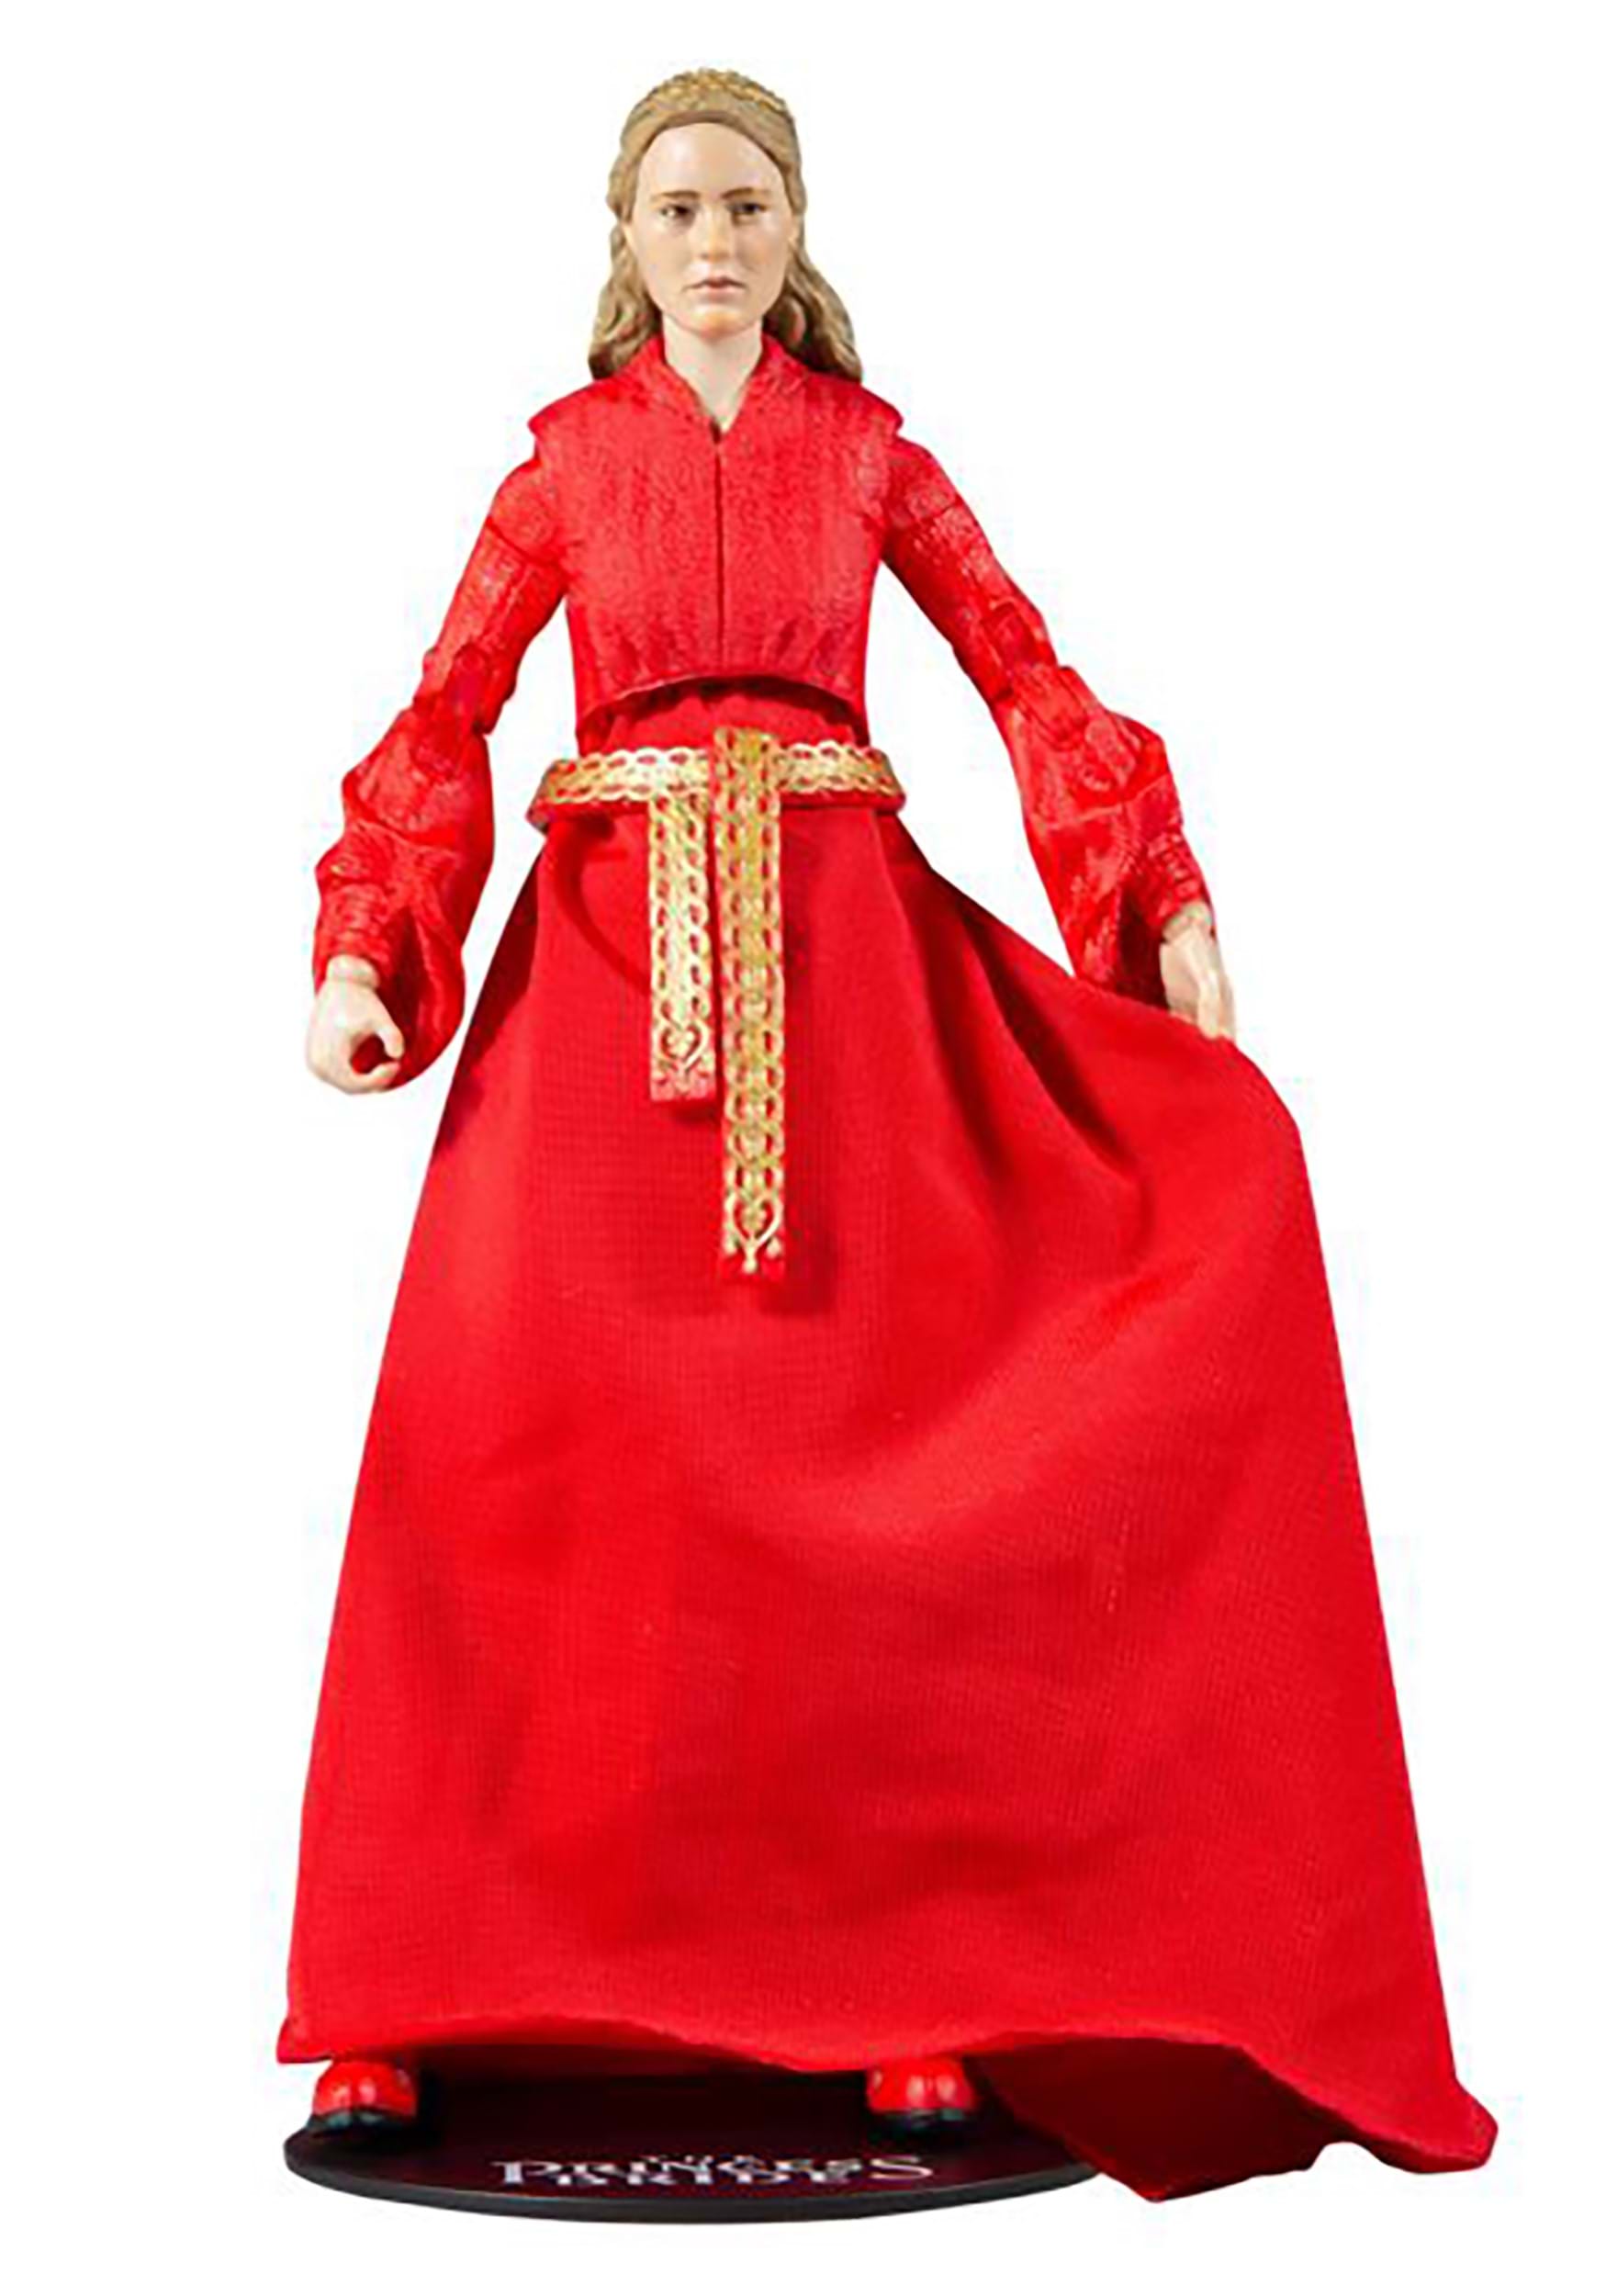 Red Dress The Princess Bride Princess Buttercup Figure